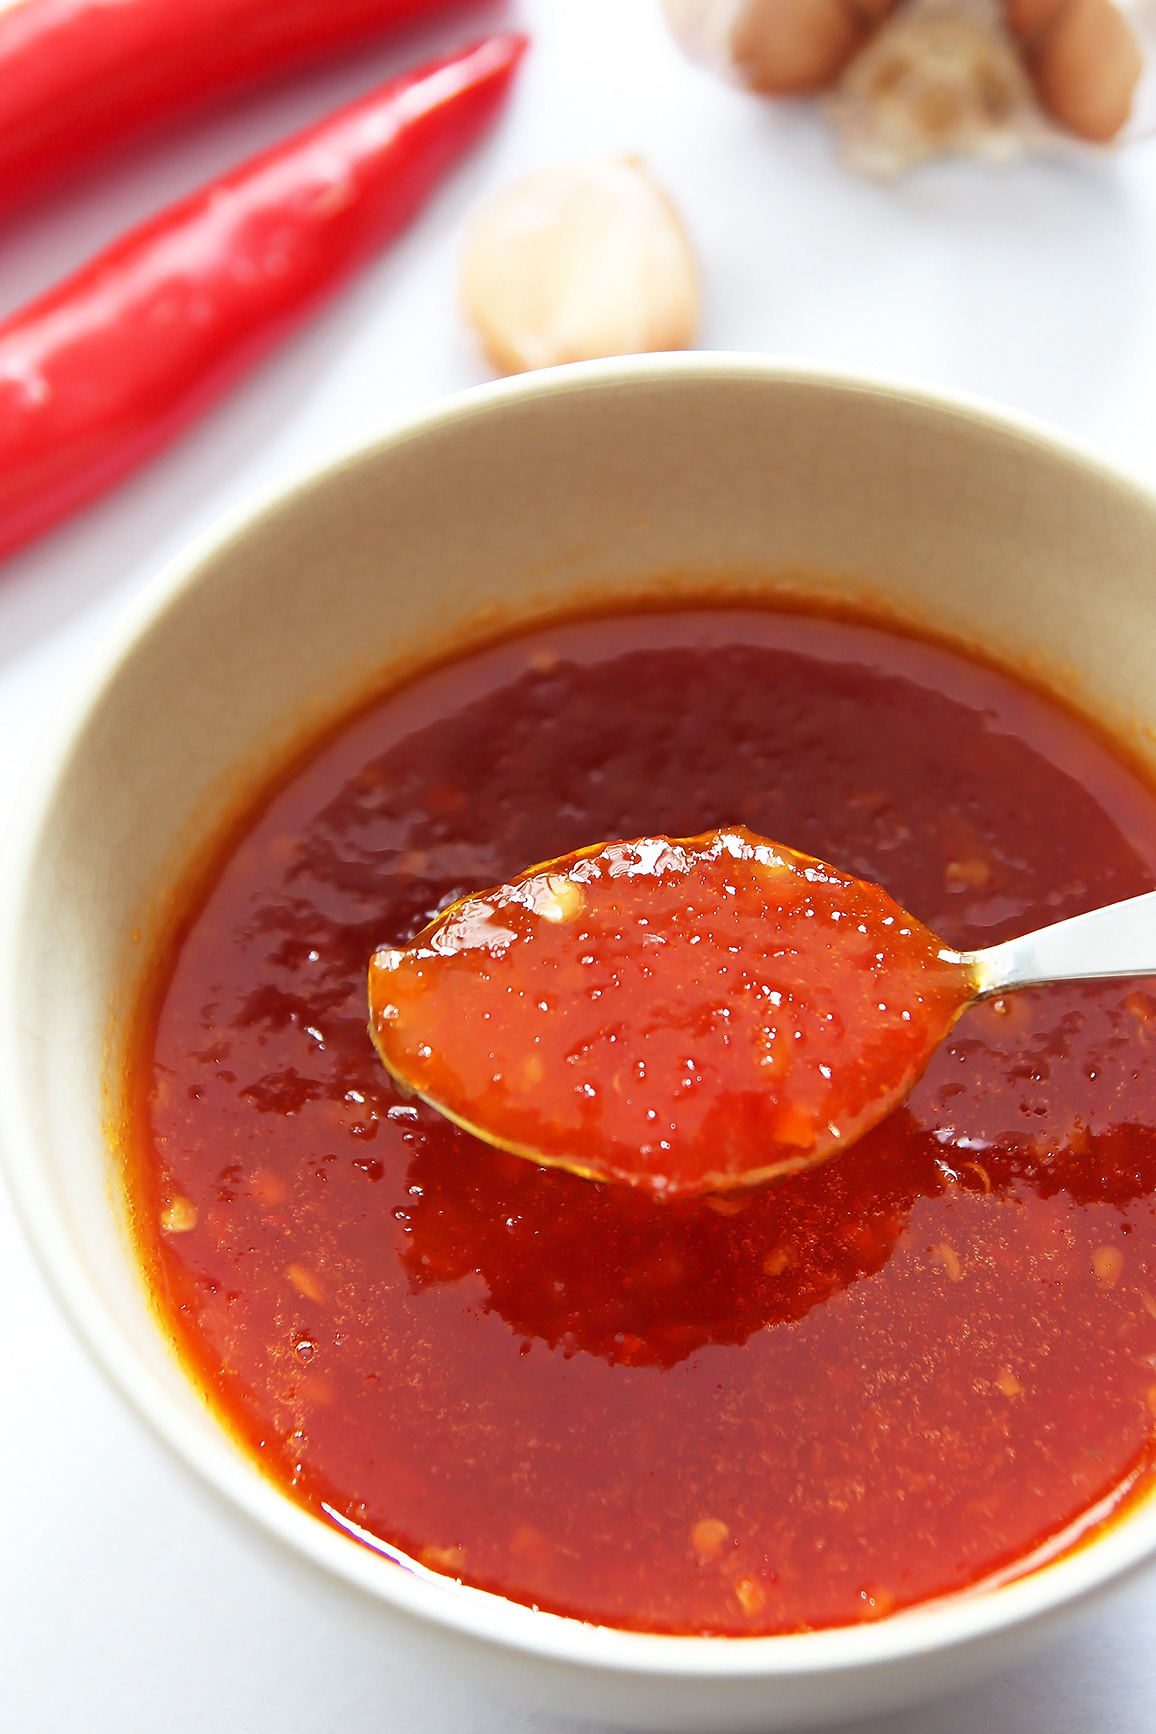 Thai Sweet Chili Sauce Recipe Leelalicious,Best Emergency Food Kits